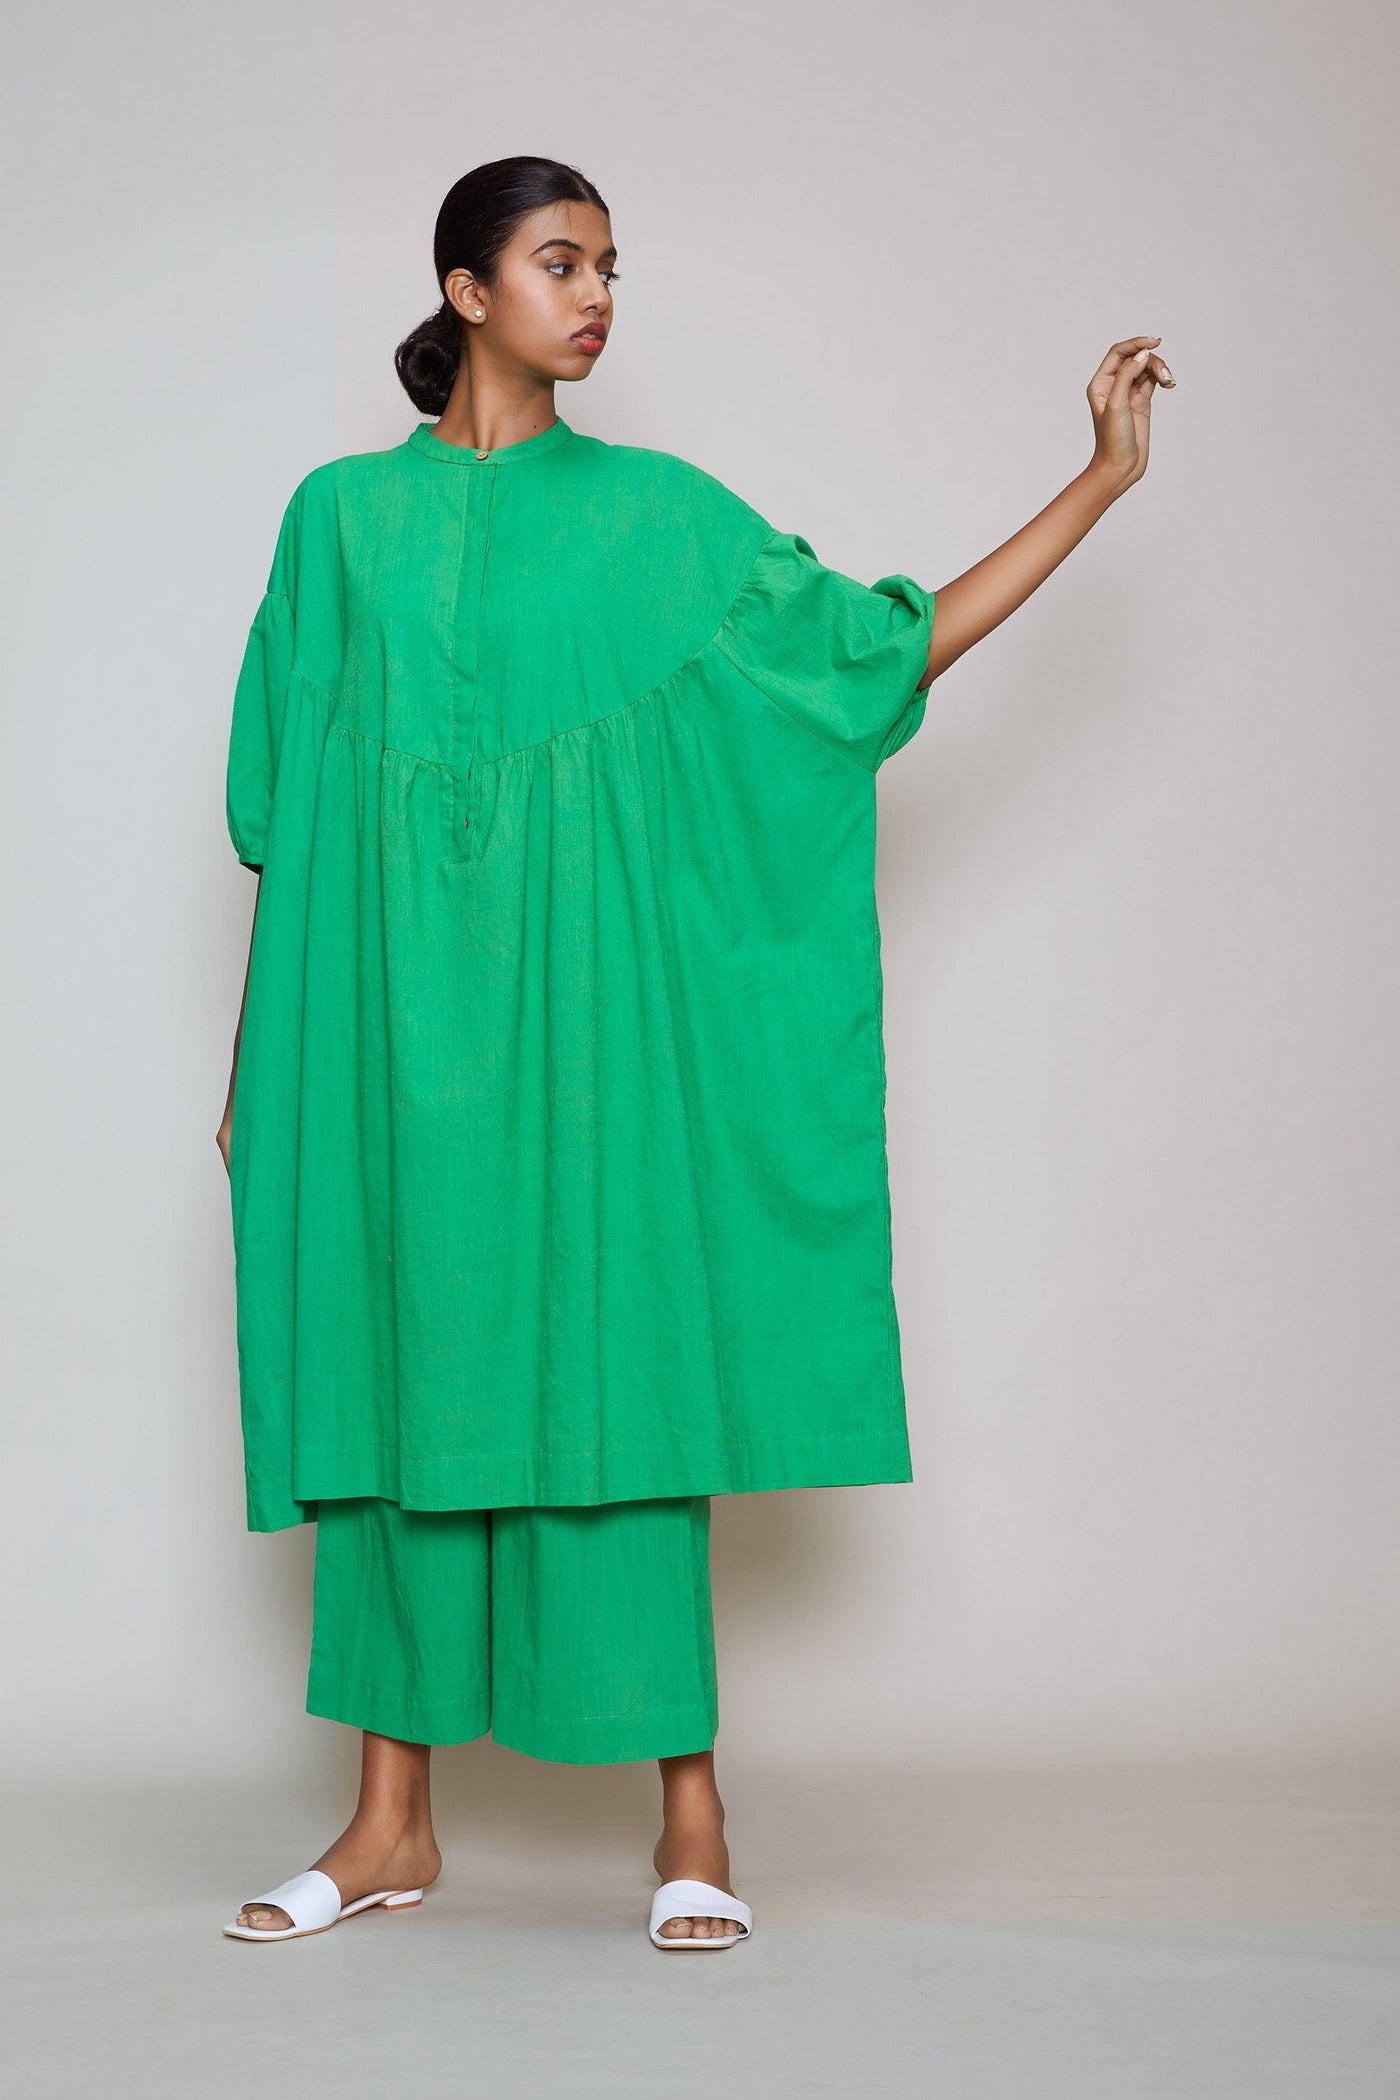 MATI ACRA TUNIC DRESS - GREEN Fashion Mati